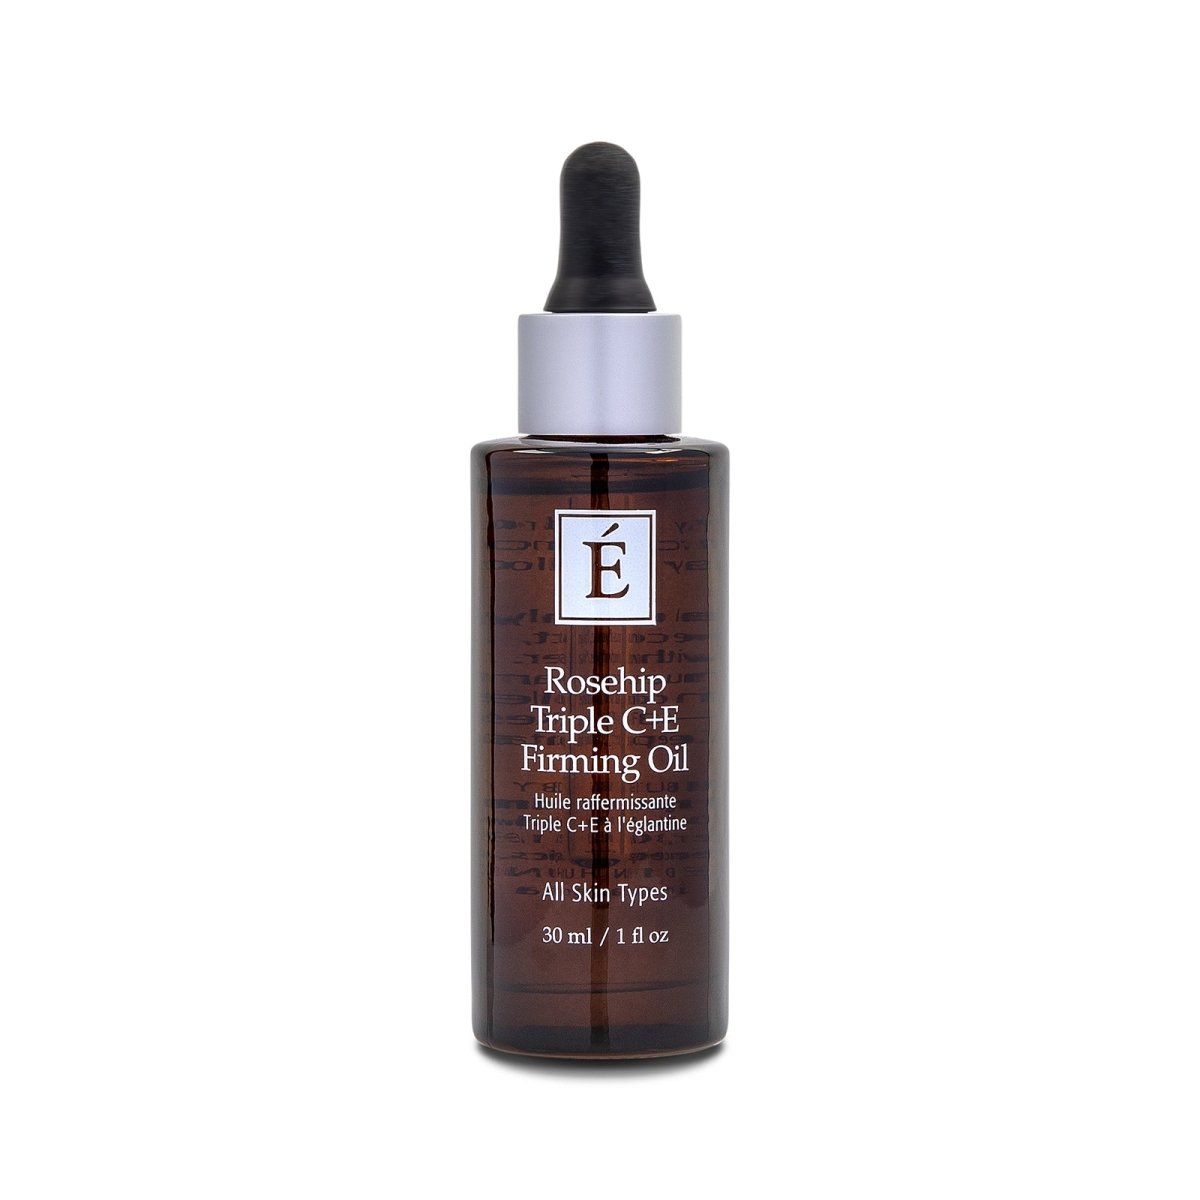 Eminence Organics Rosehip Triple C+E Firming Oil - SkincareEssentials